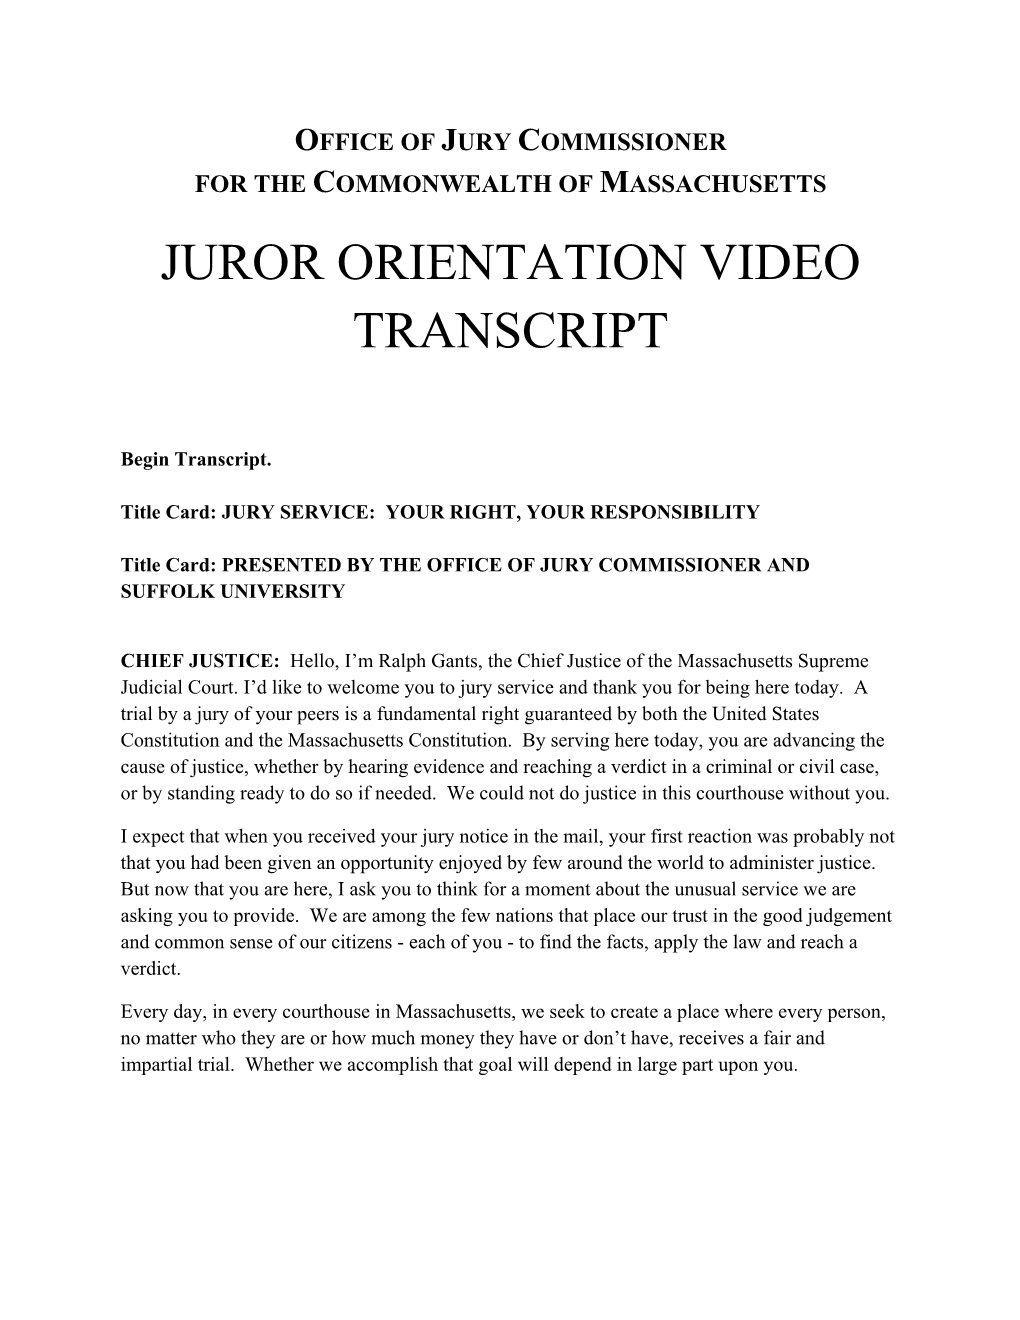 Open PDF File, 30.35 KB, for Juror Orientation Video Transcript